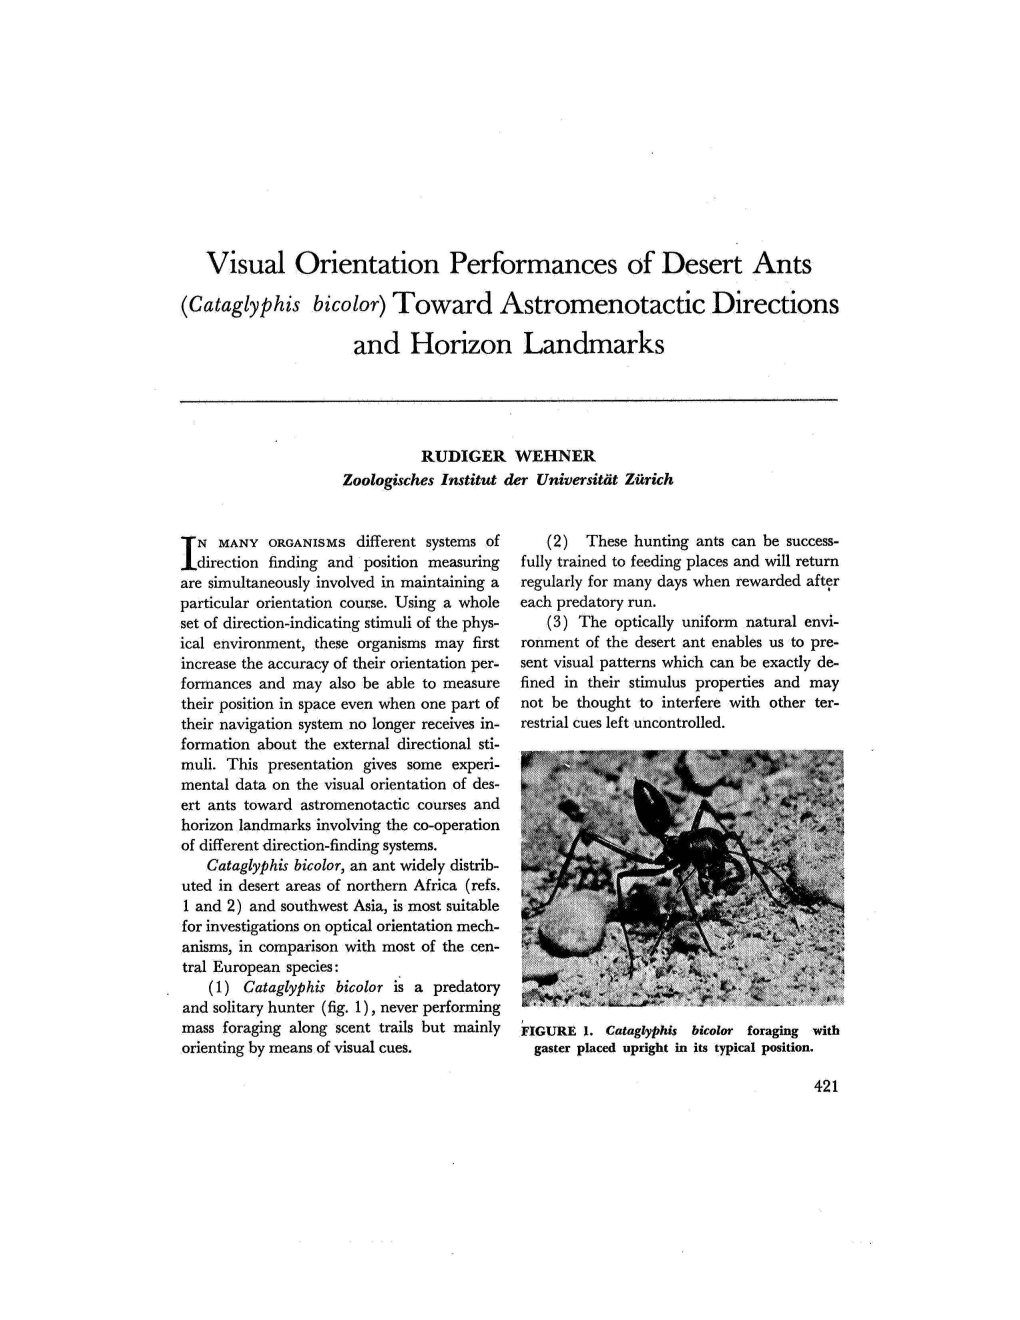 Visual Orientation Performances of Desert Ants Toward As Tromeno